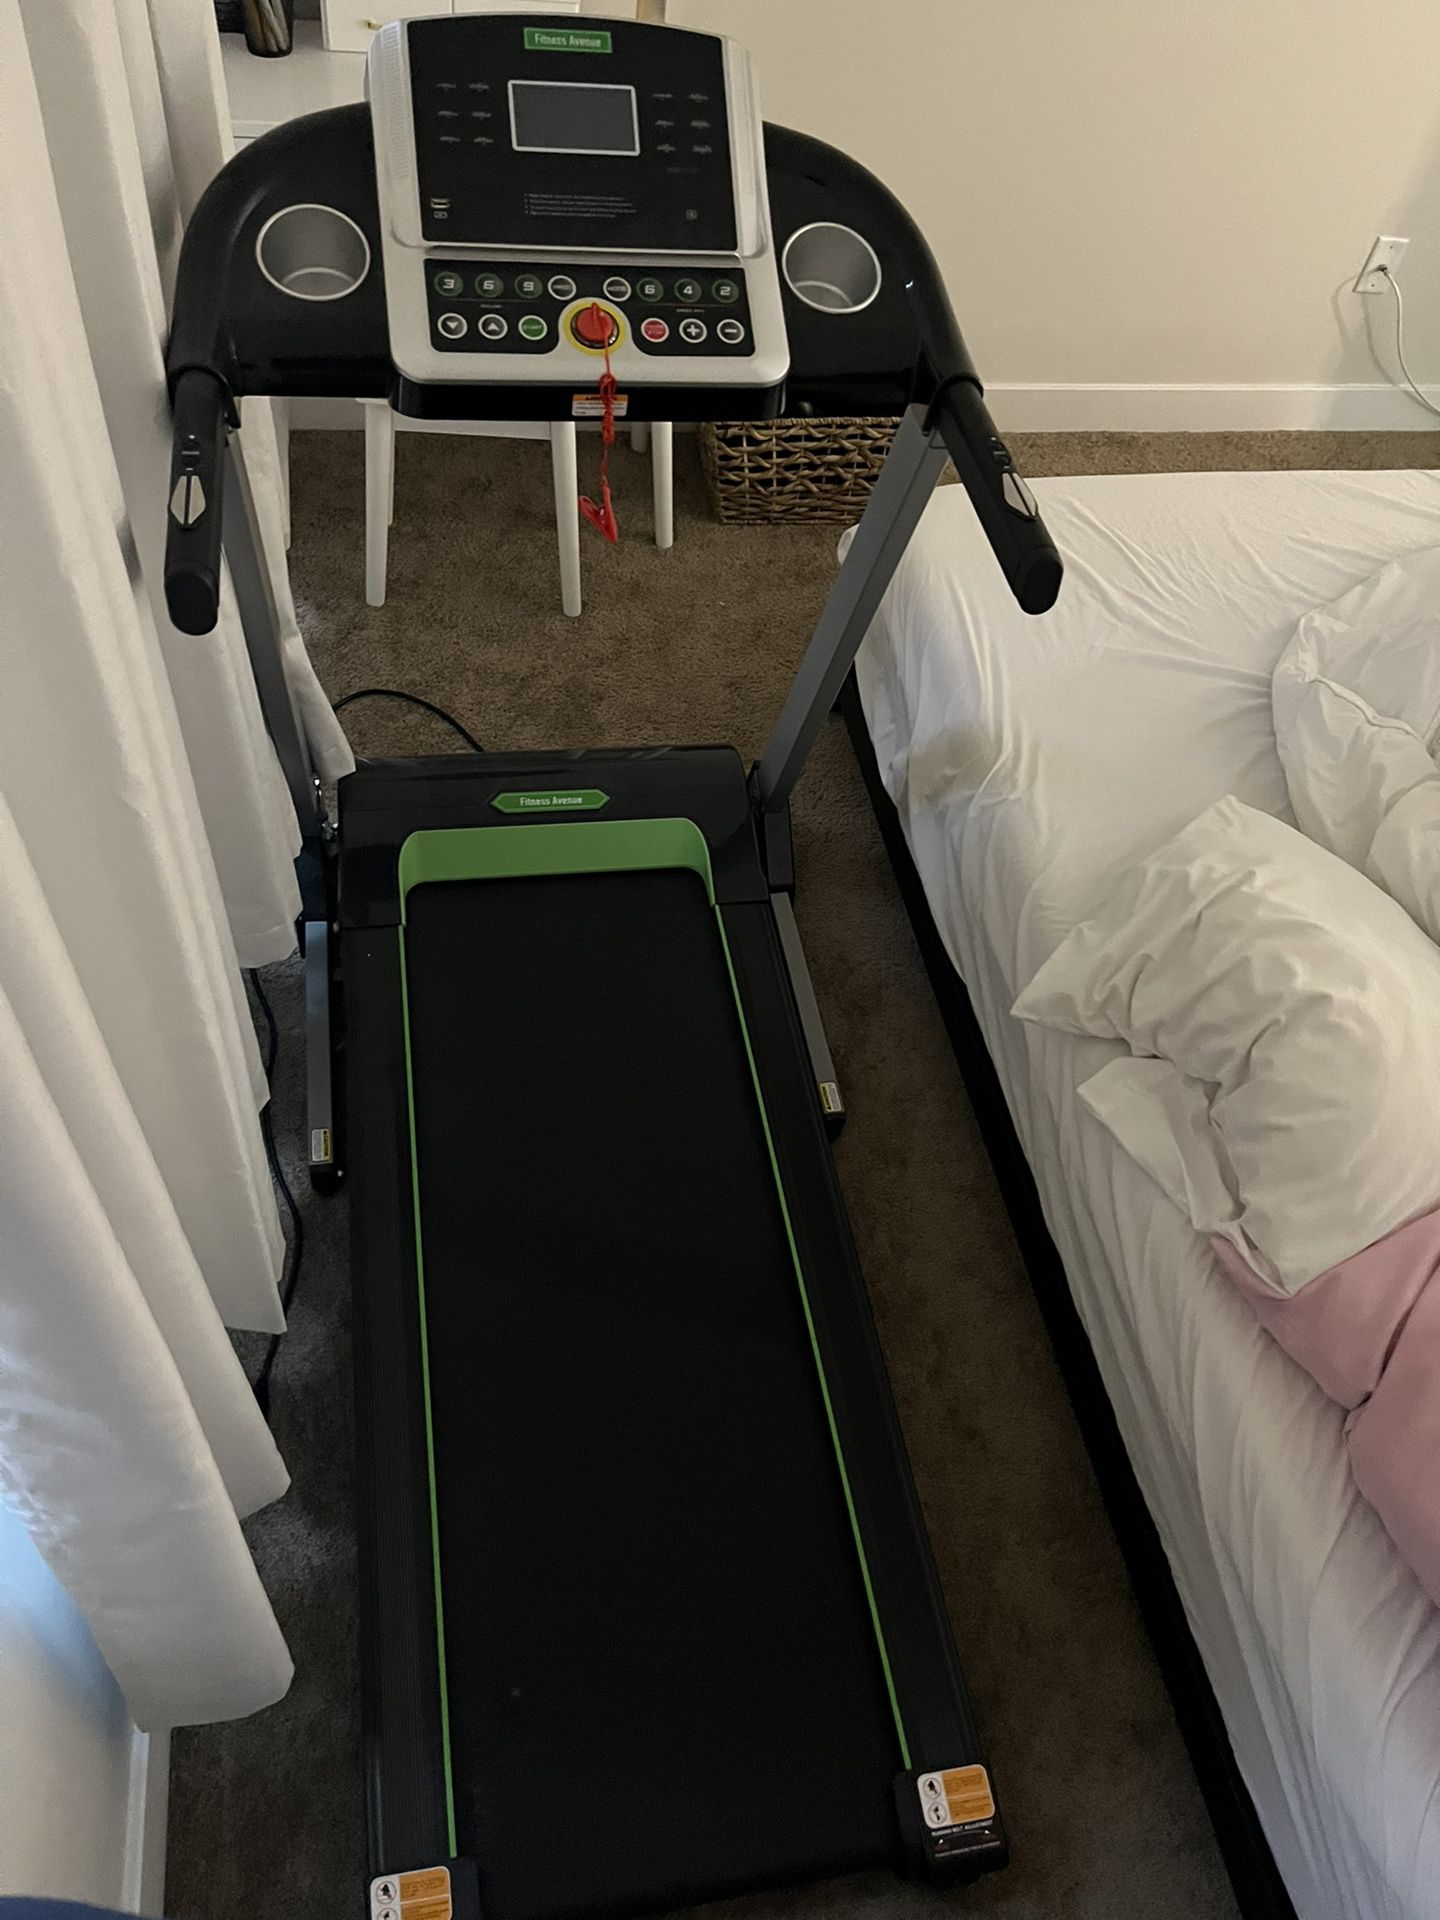 Treadmill, Like New